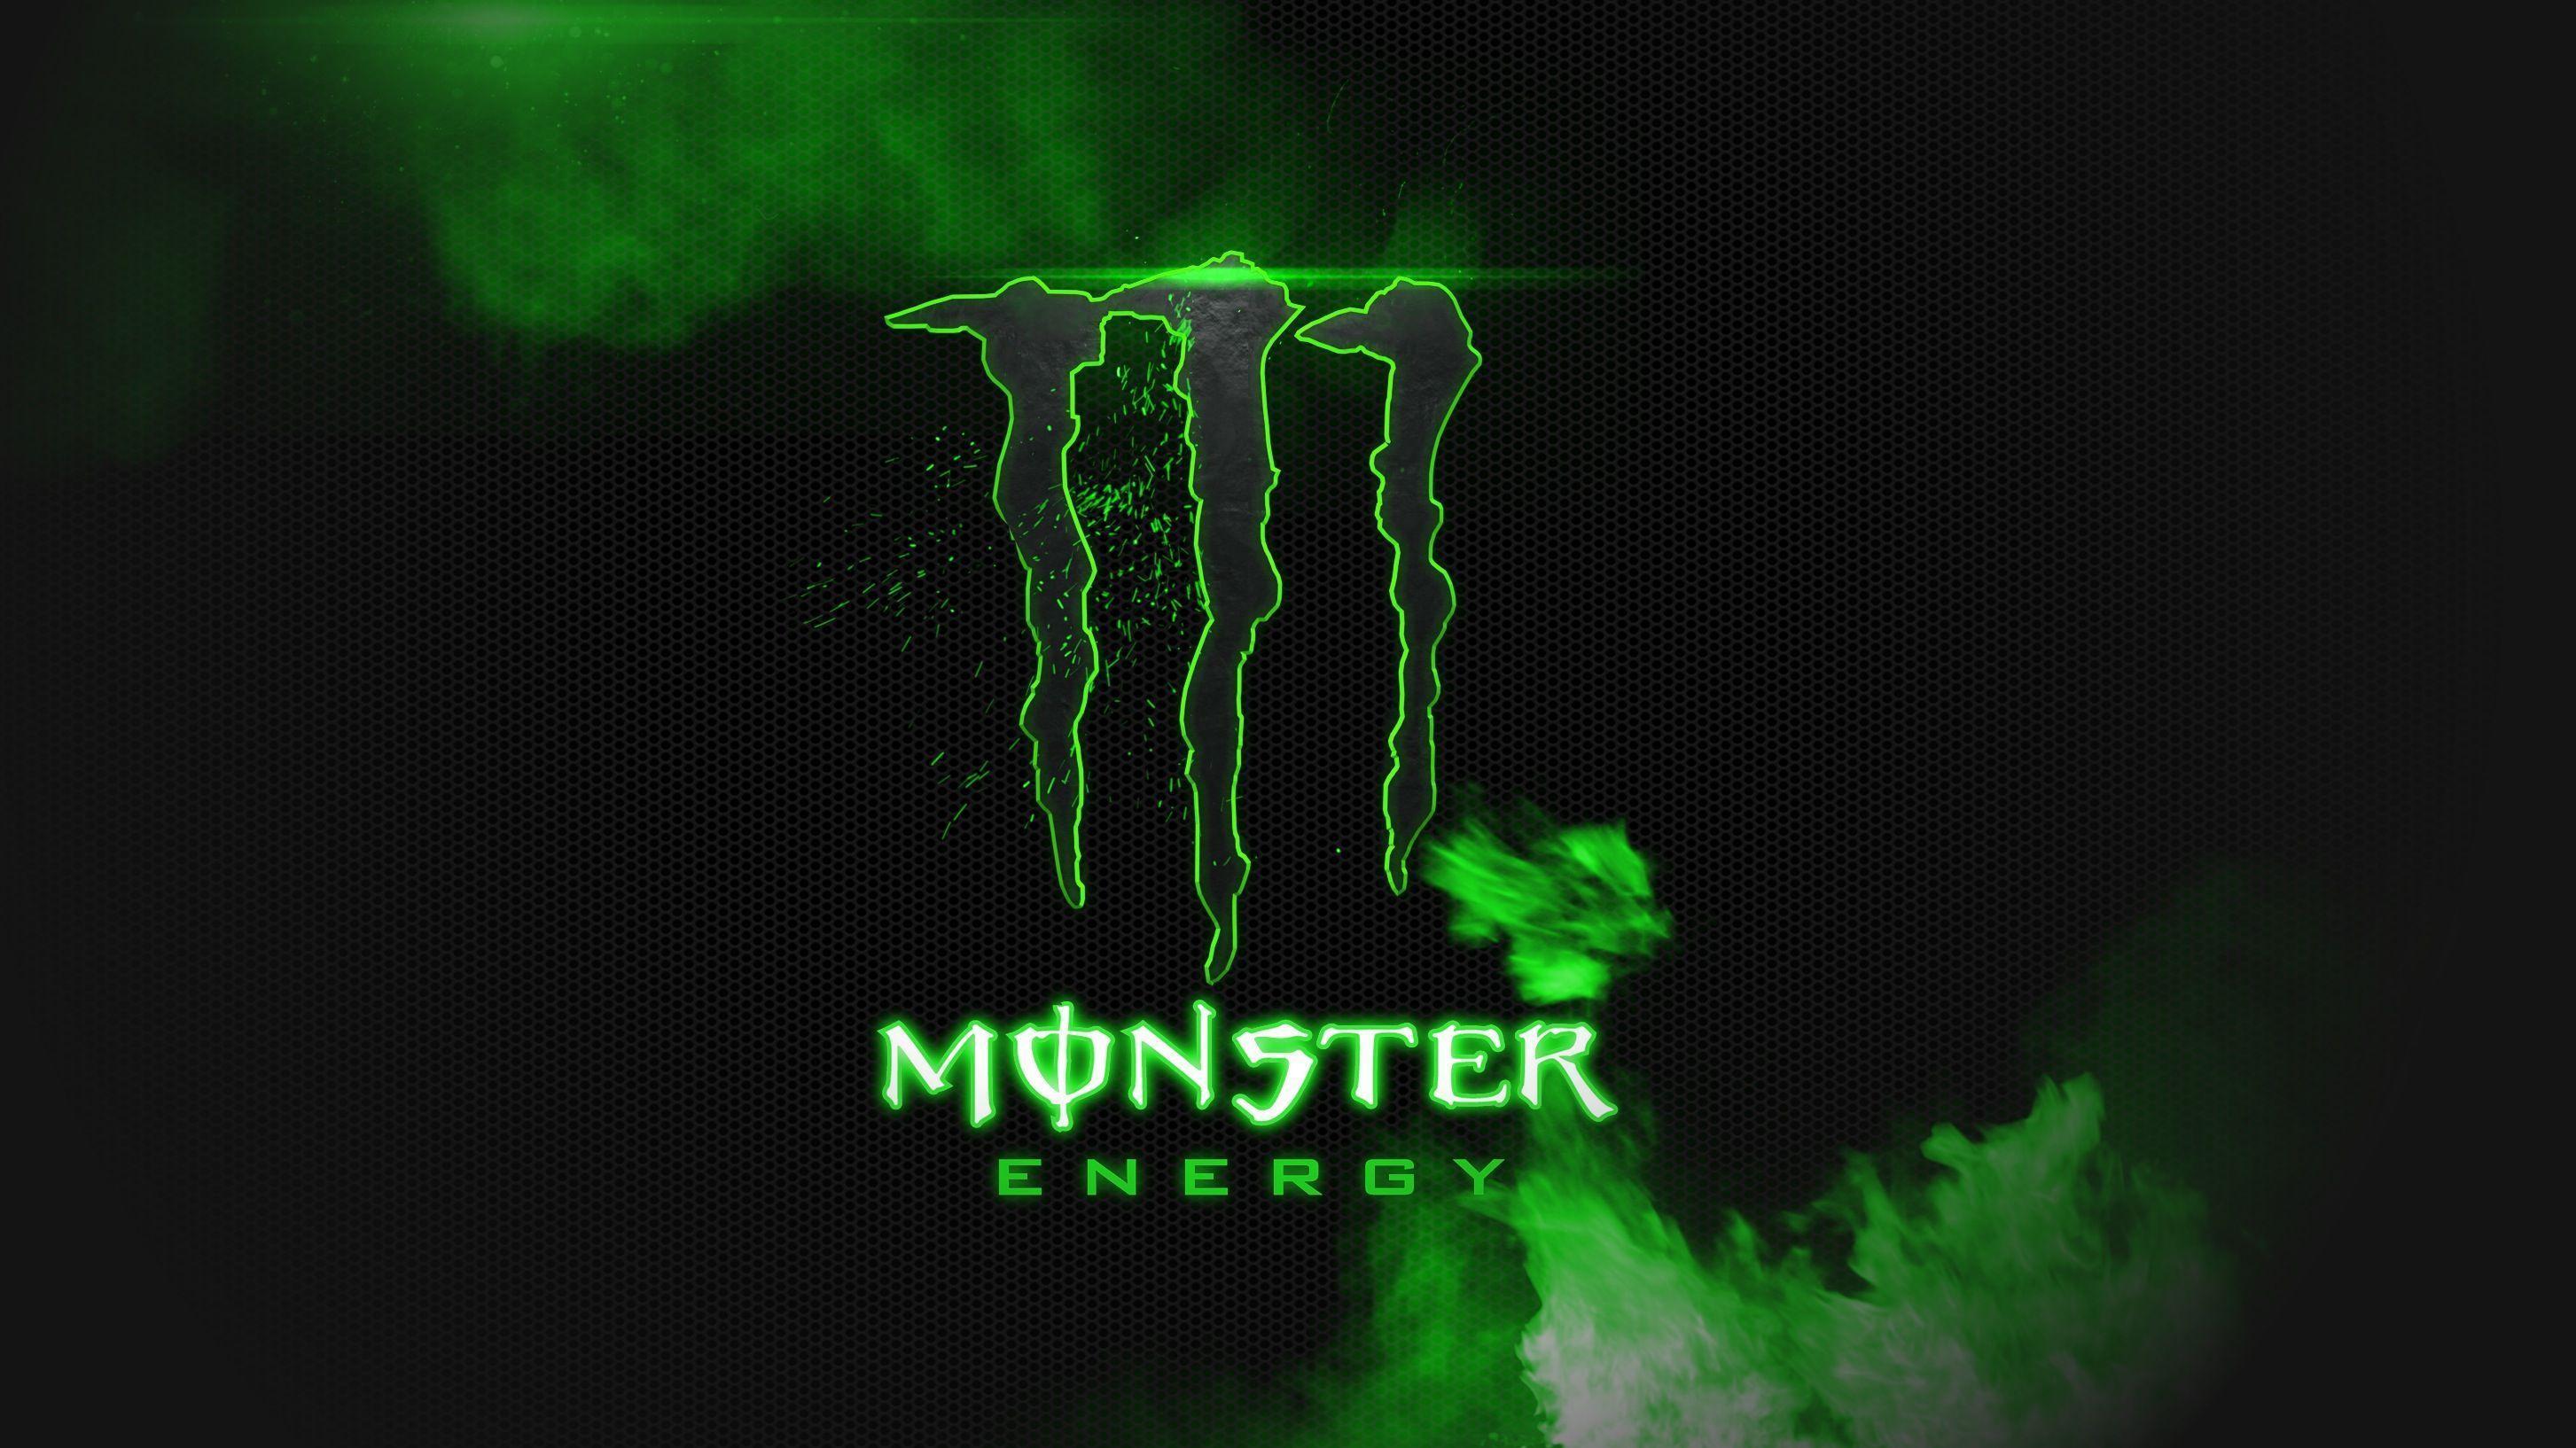 Monster Energy Green Wallpaper. Free Download Wallpaper